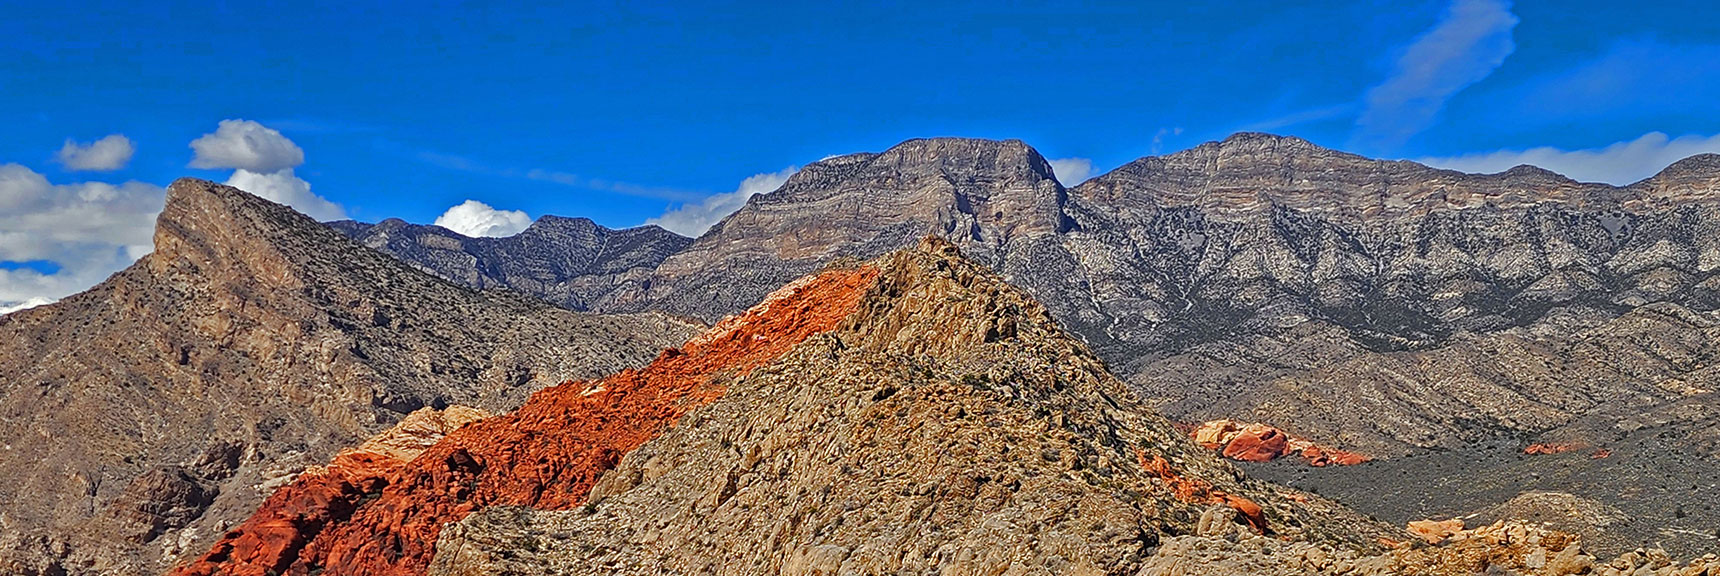 Enlarged View of Red Sandstone Summit Area Beyond Next High Point on Ridge. | Gray Cap Ridge / Brownstone Basin Loop | La Madre Mountains Wilderness, Nevada